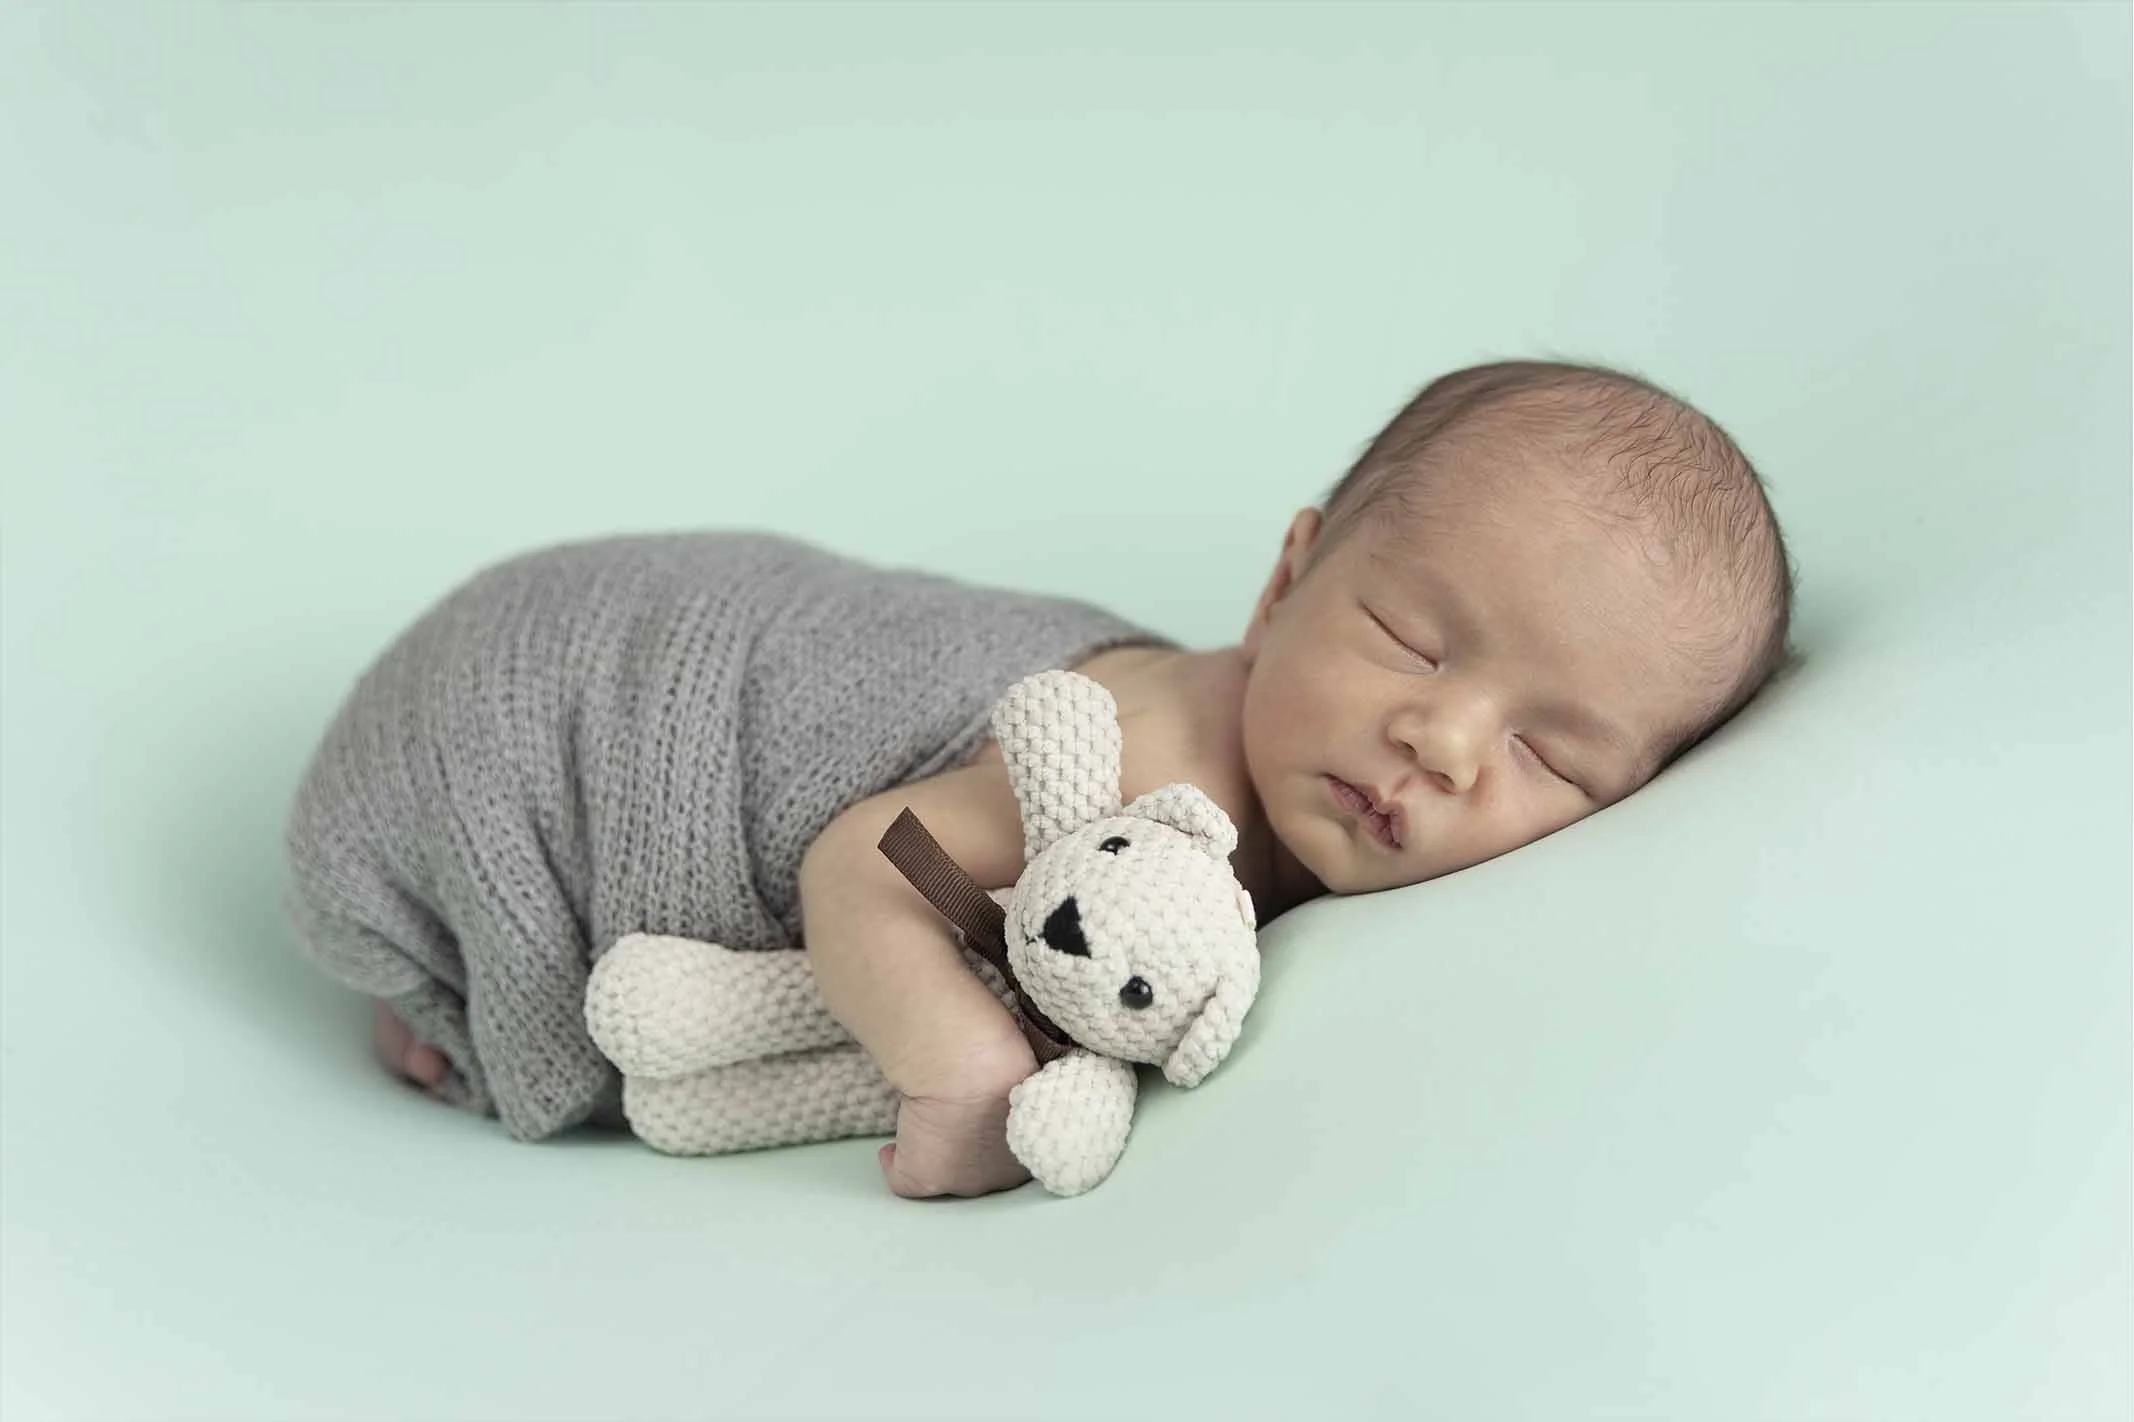 newborn holding bear toy for photoshoot